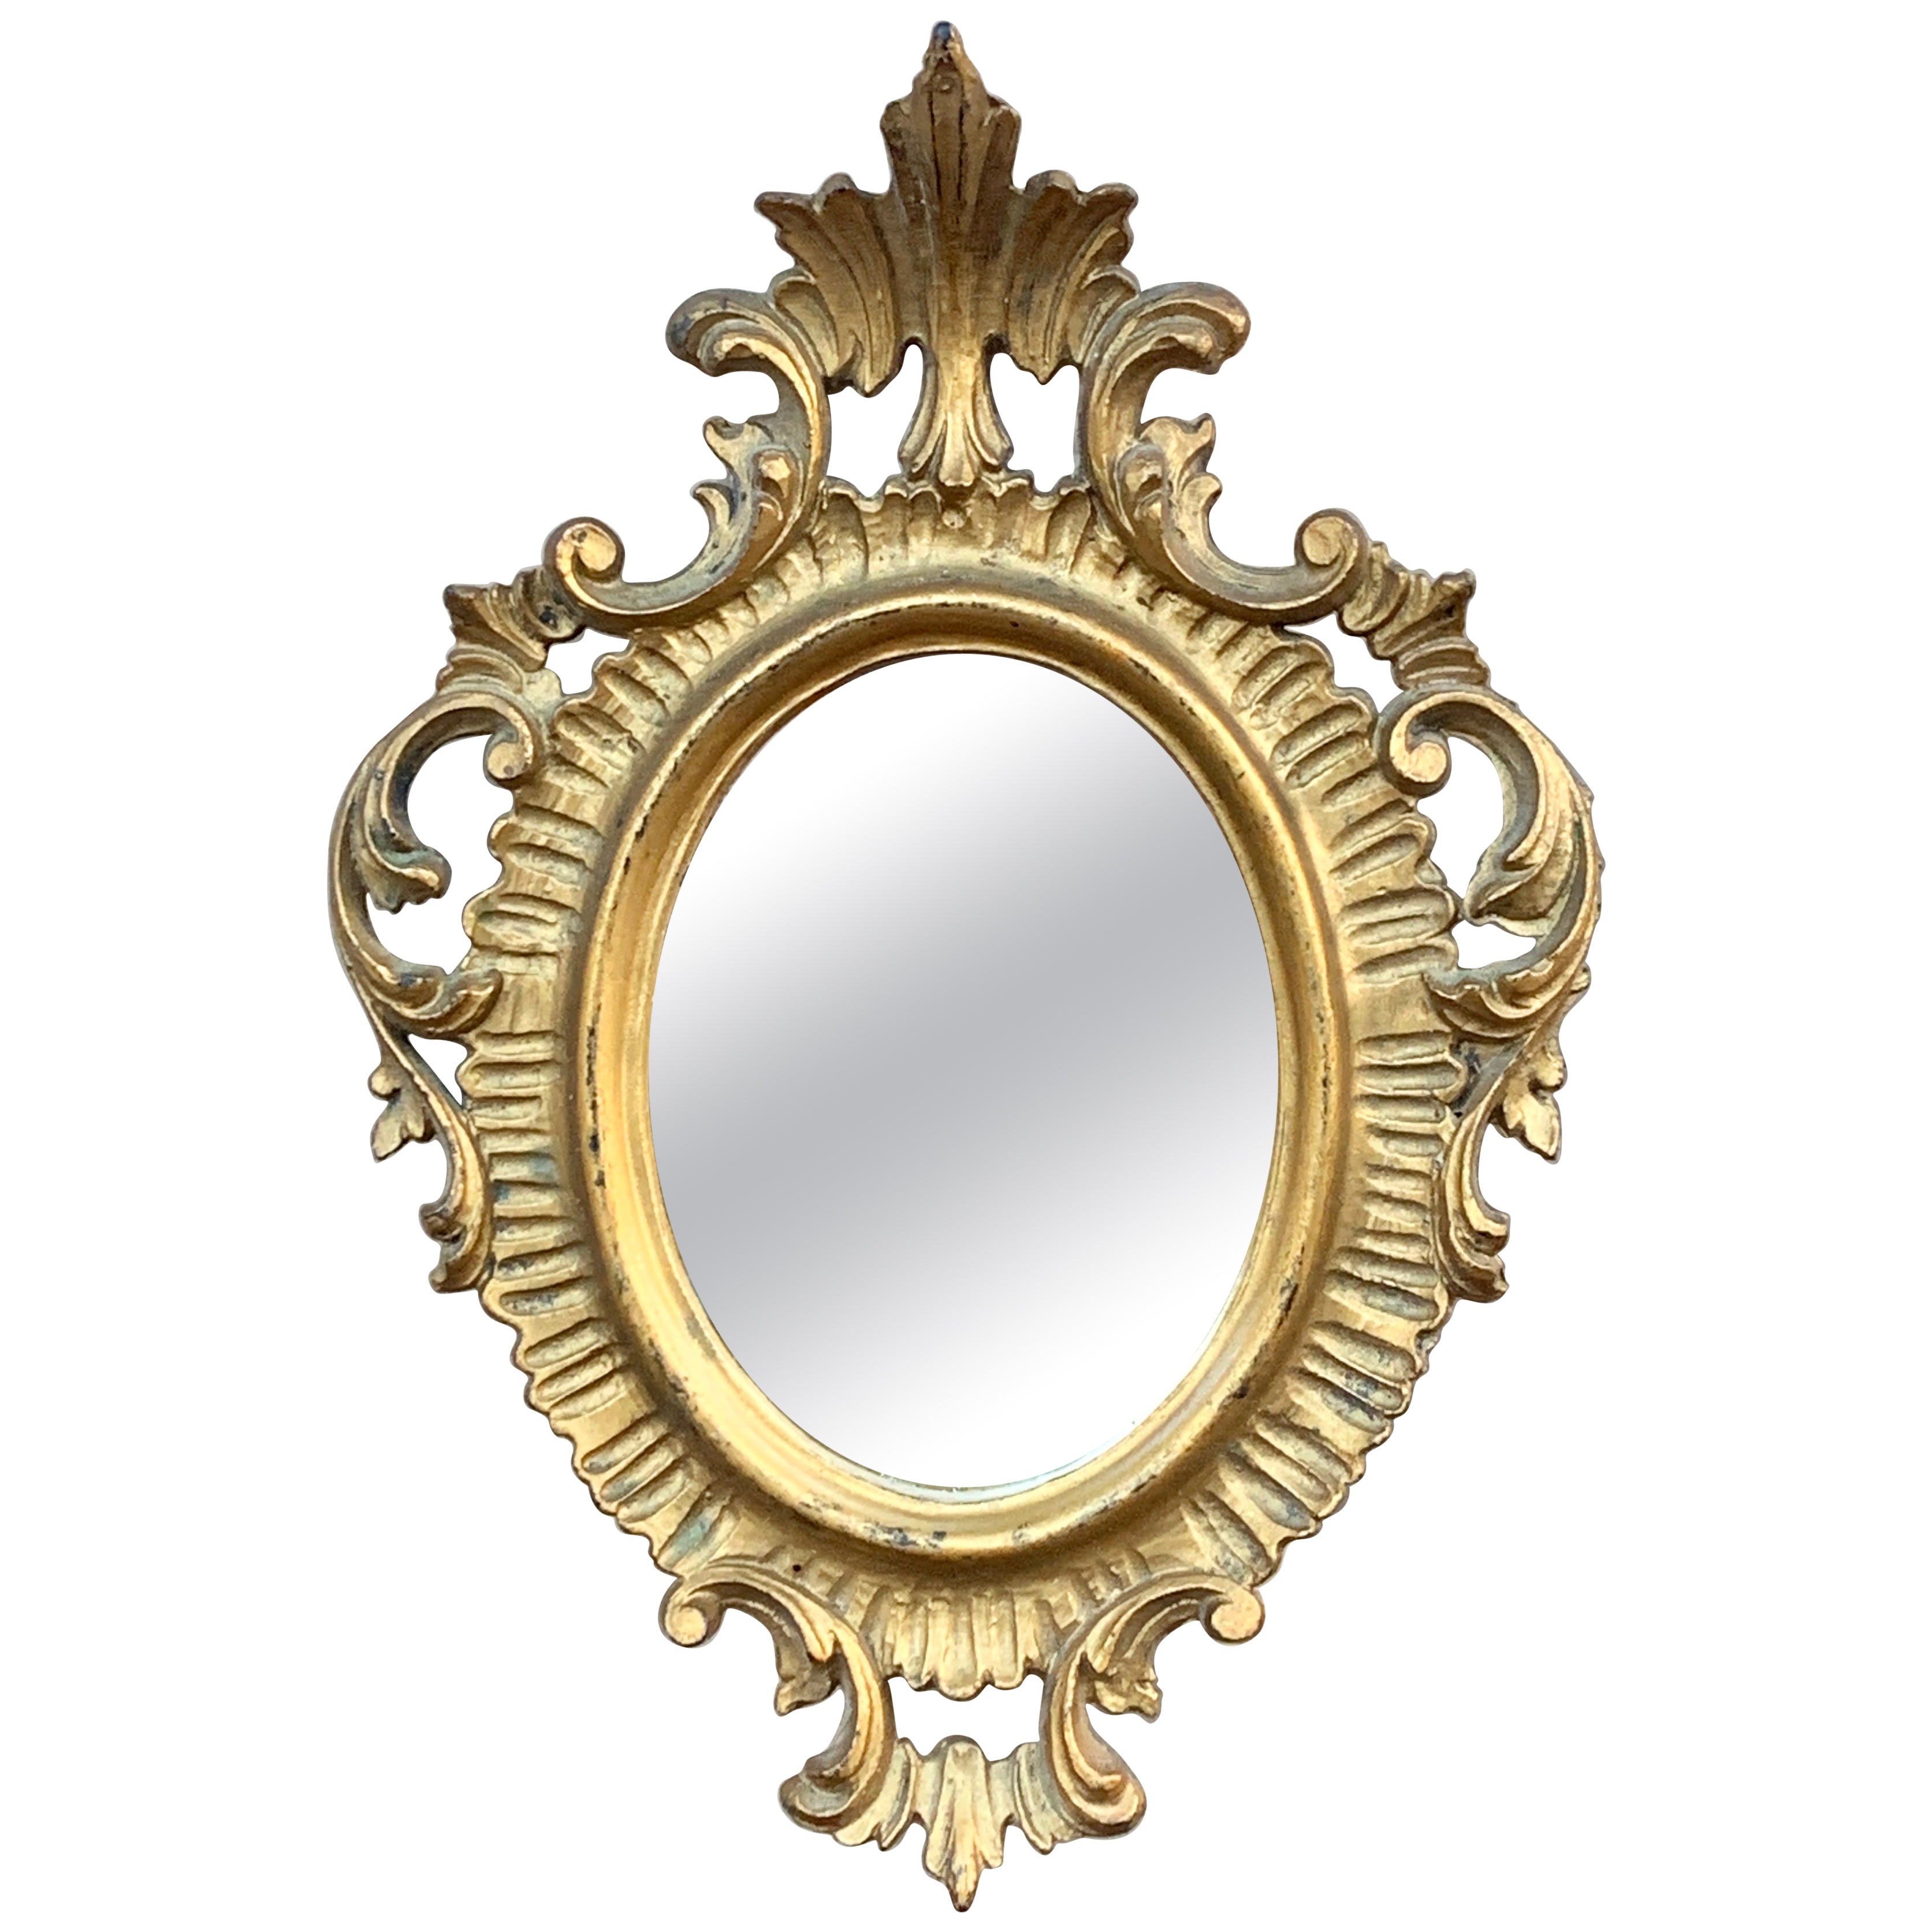 Italian Florentine Baroque Gold Giltwood Wall Mirror